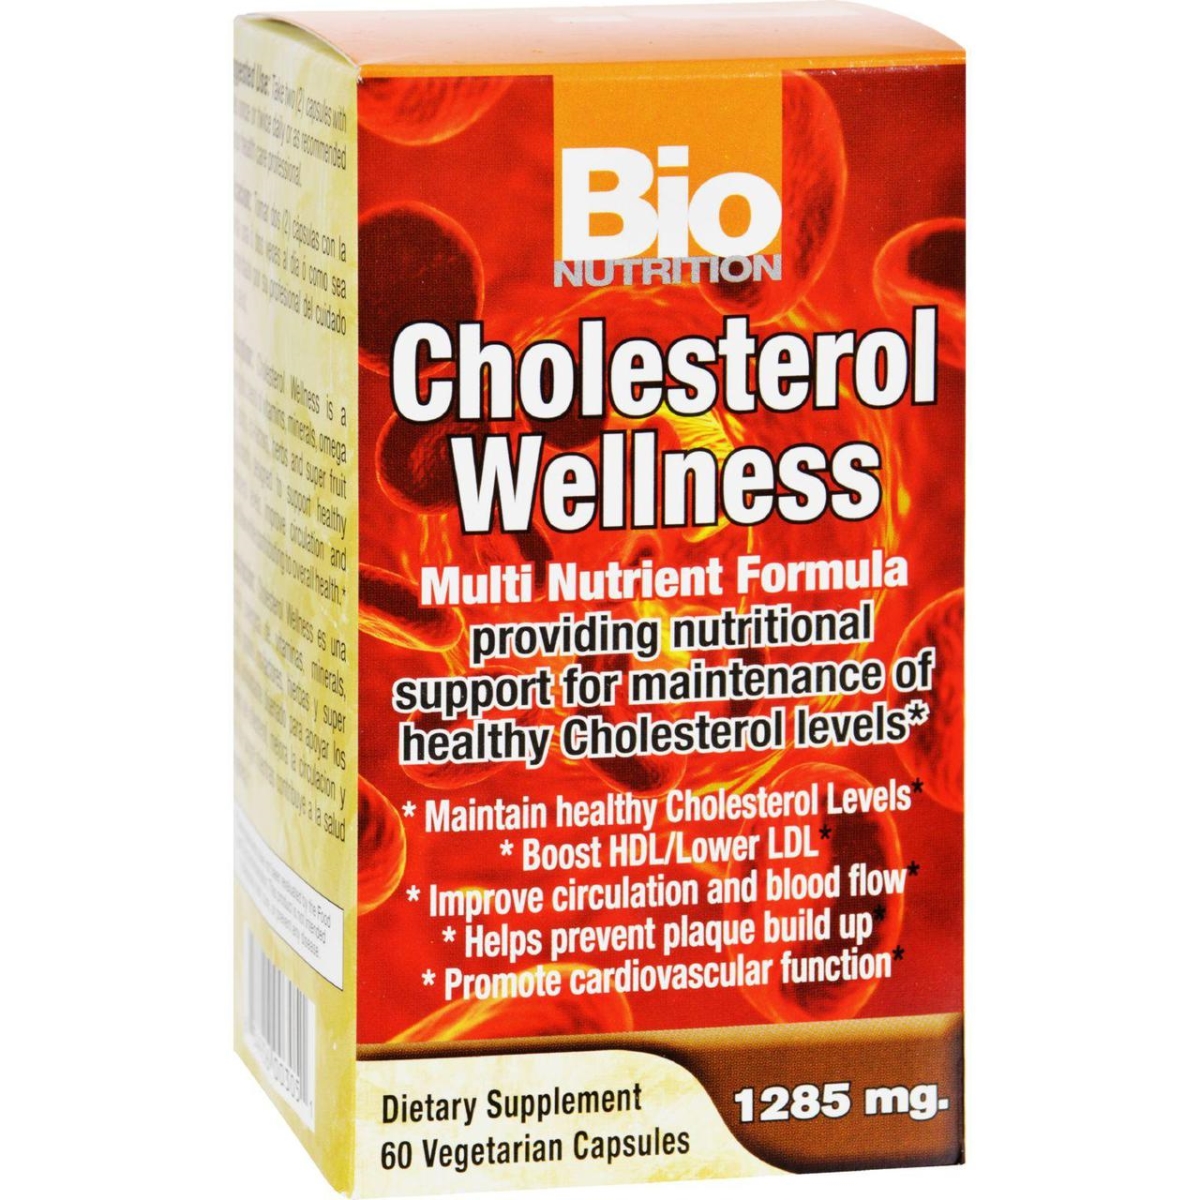 Bio Nutrition Hg1029552 Cholesterol Wellness - 60 Vegetarian Capsules